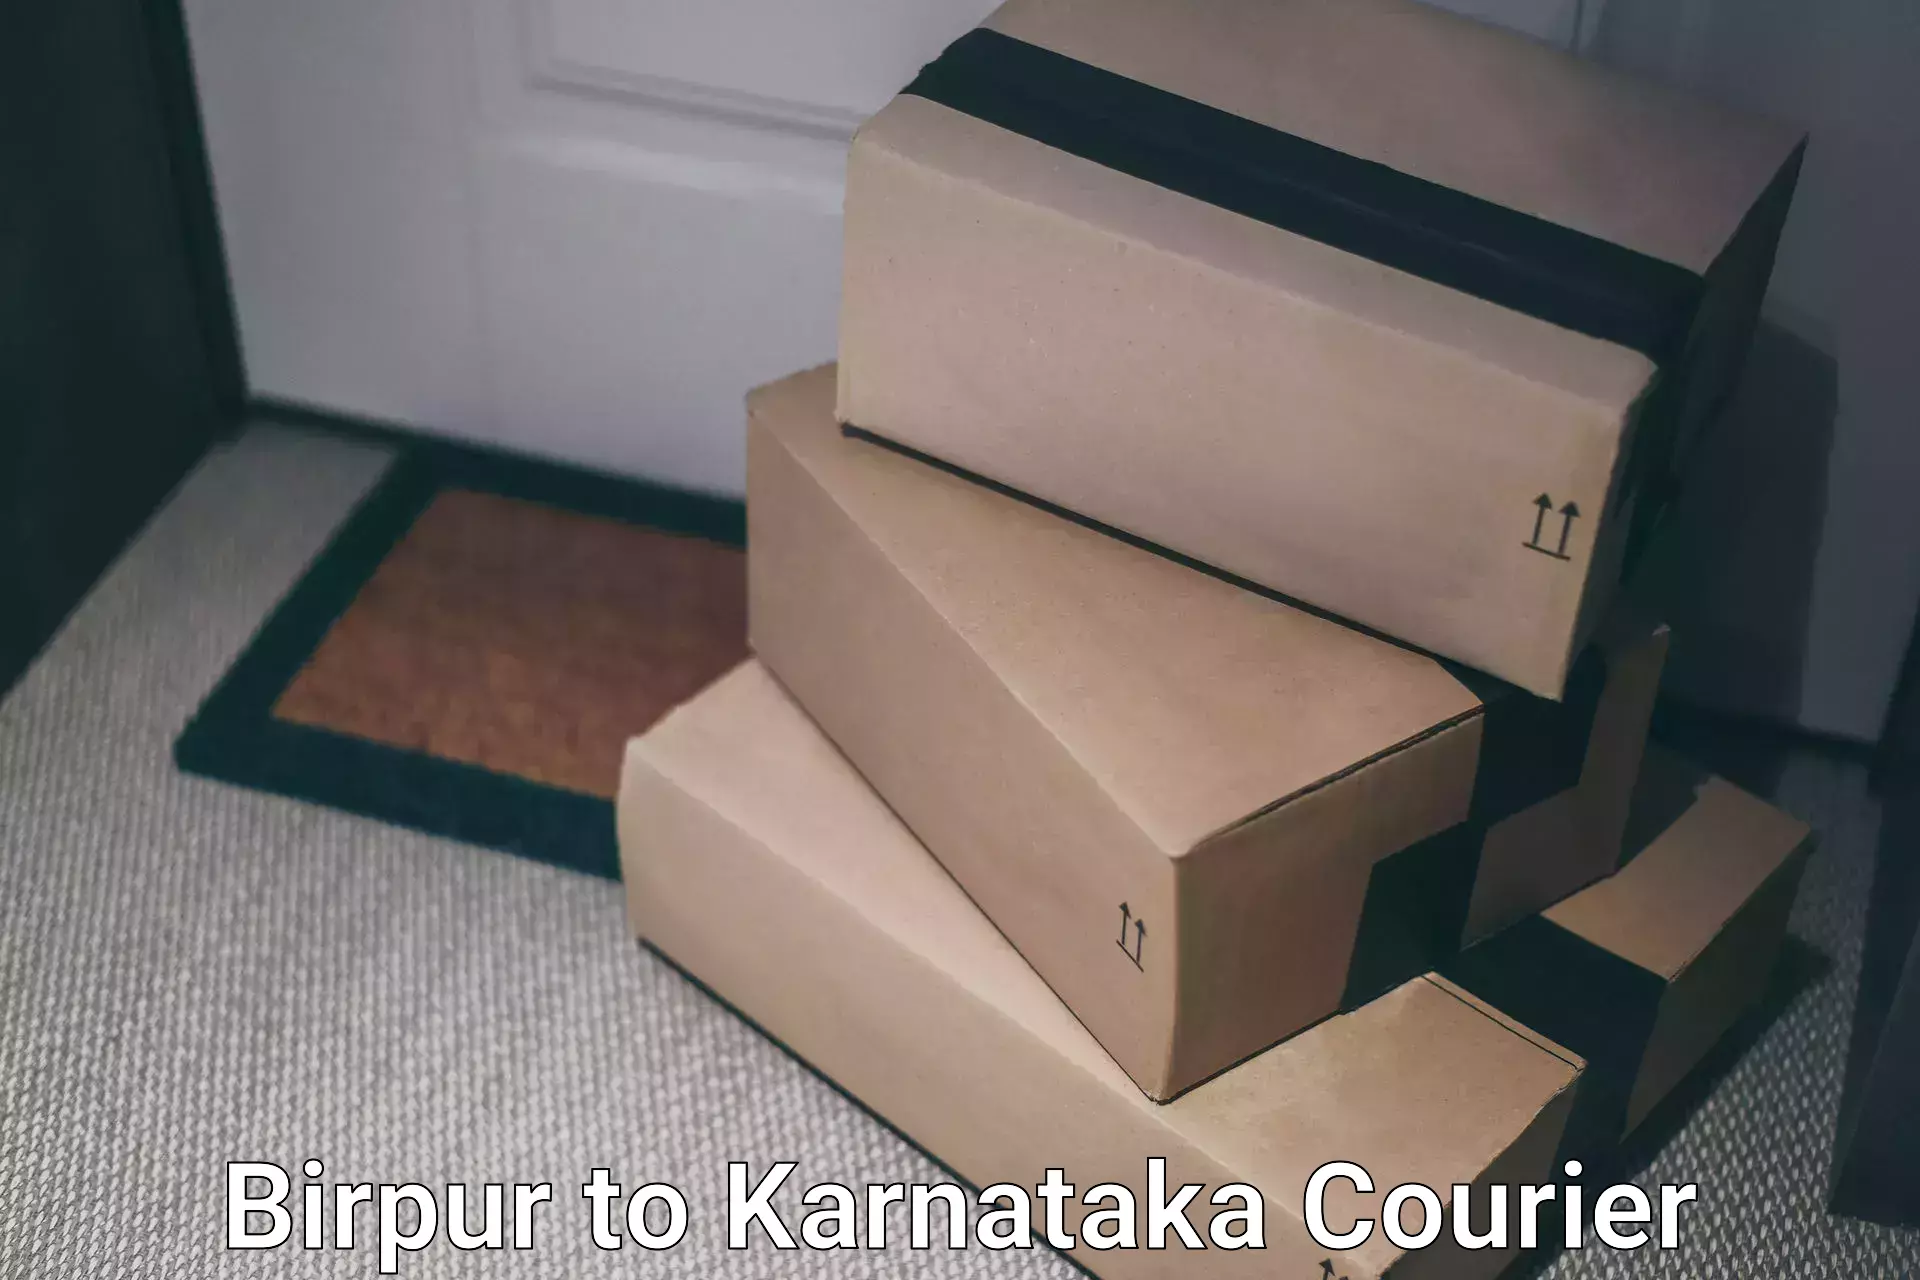 User-friendly delivery service Birpur to Karnataka